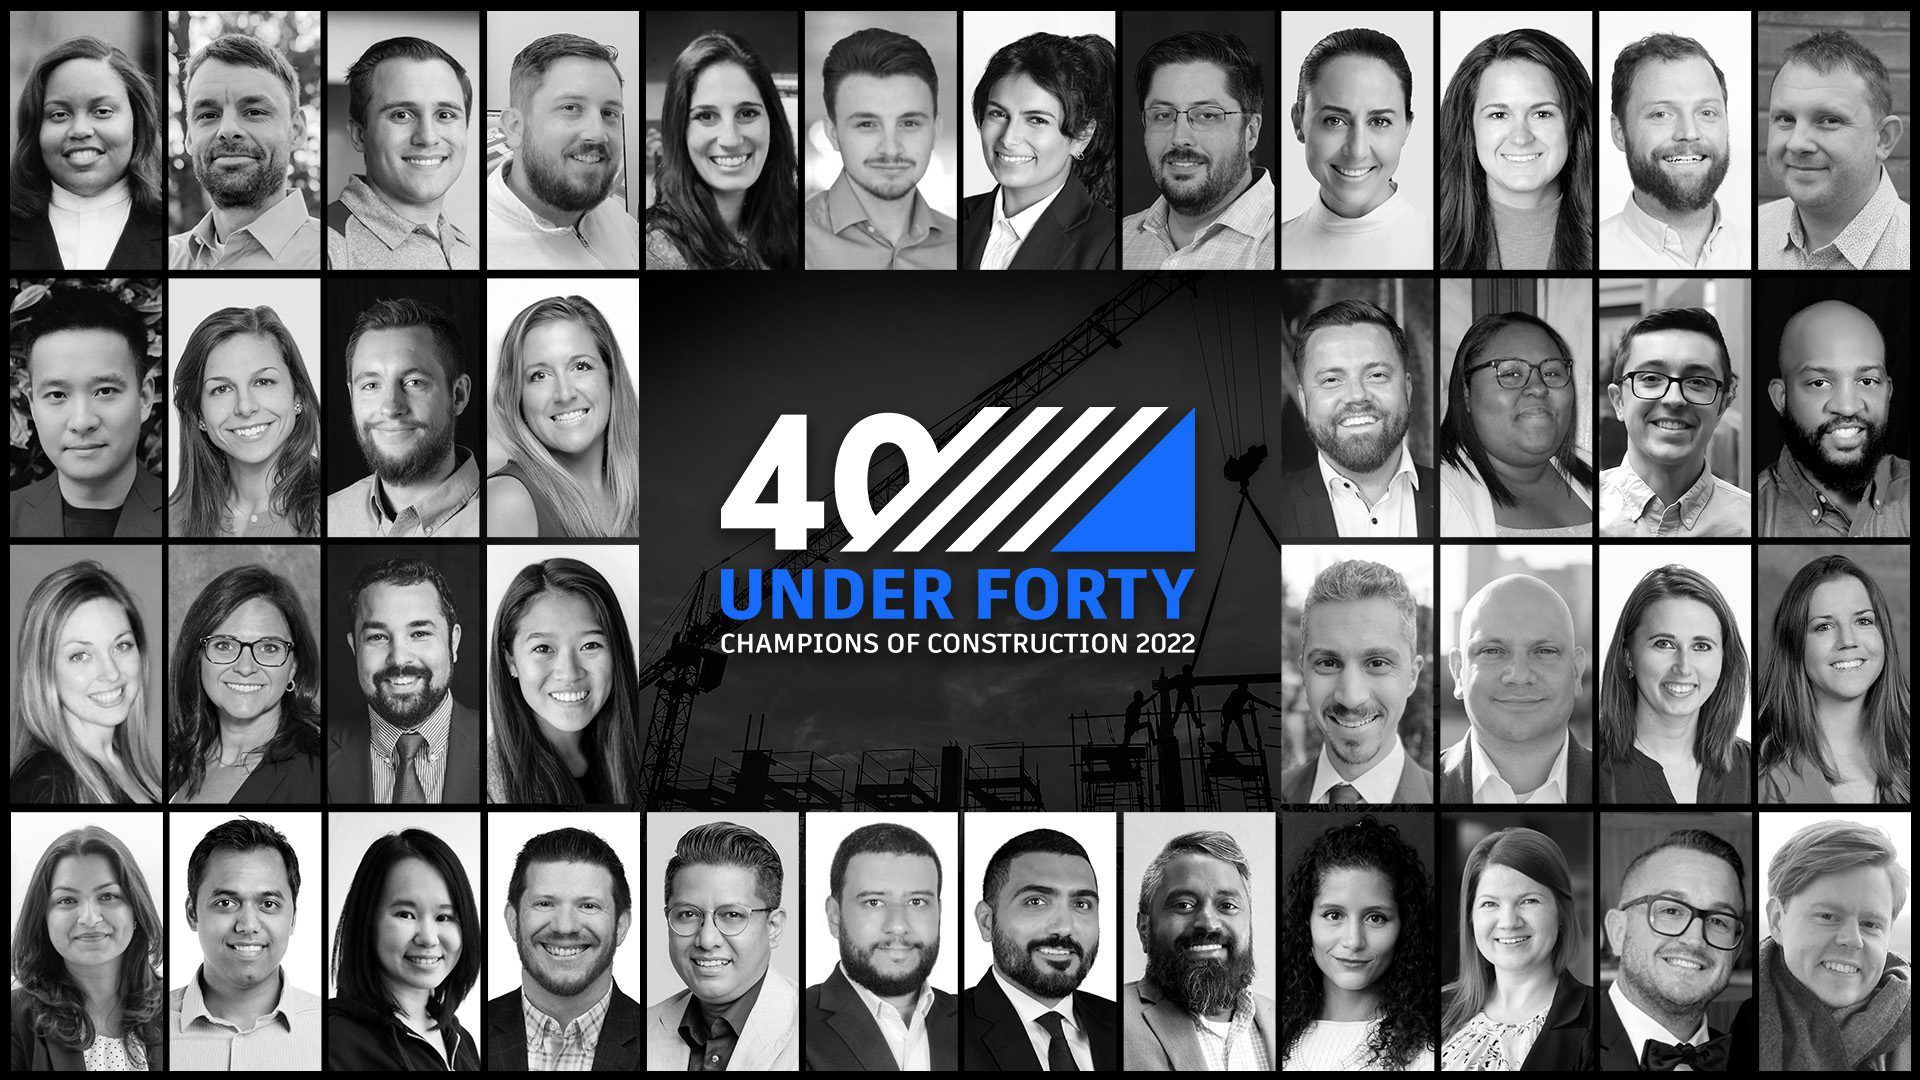 40 under 40 champions of construction autodesk 2022